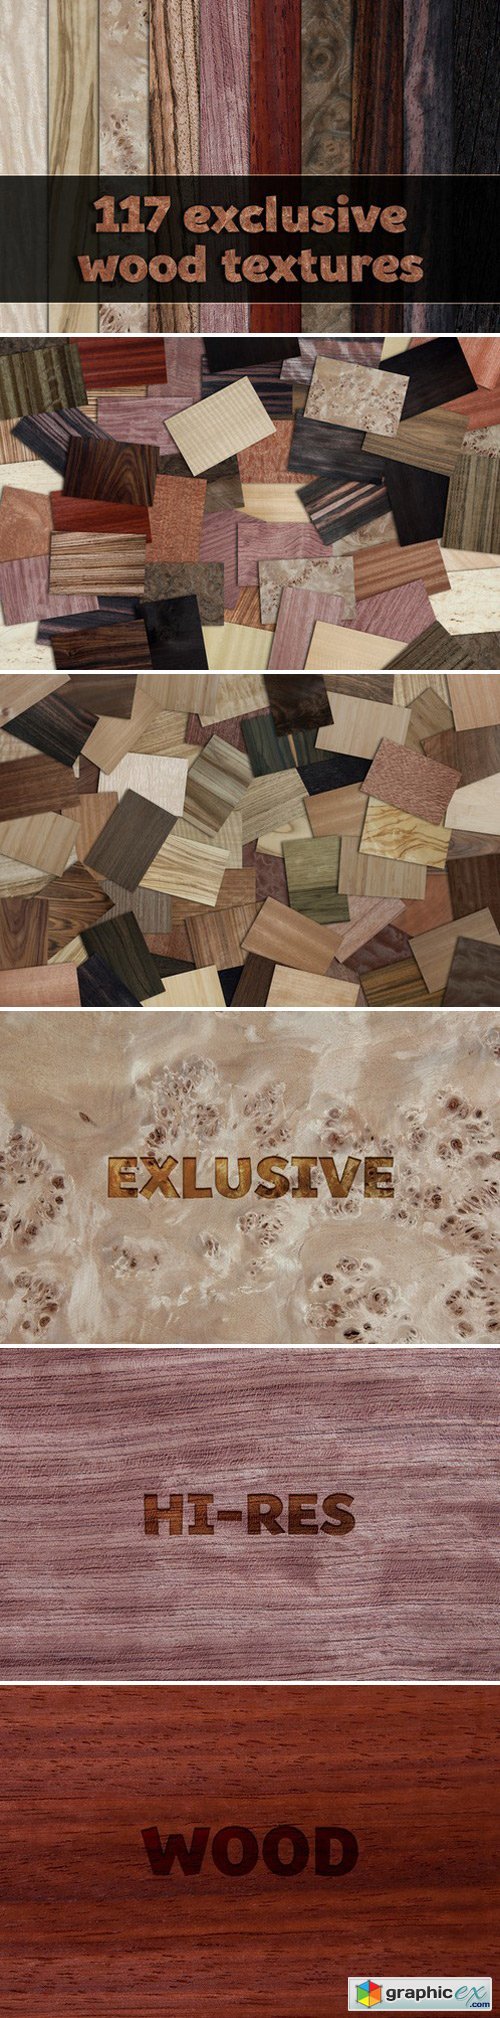 Exclusive wood veneer textures pack